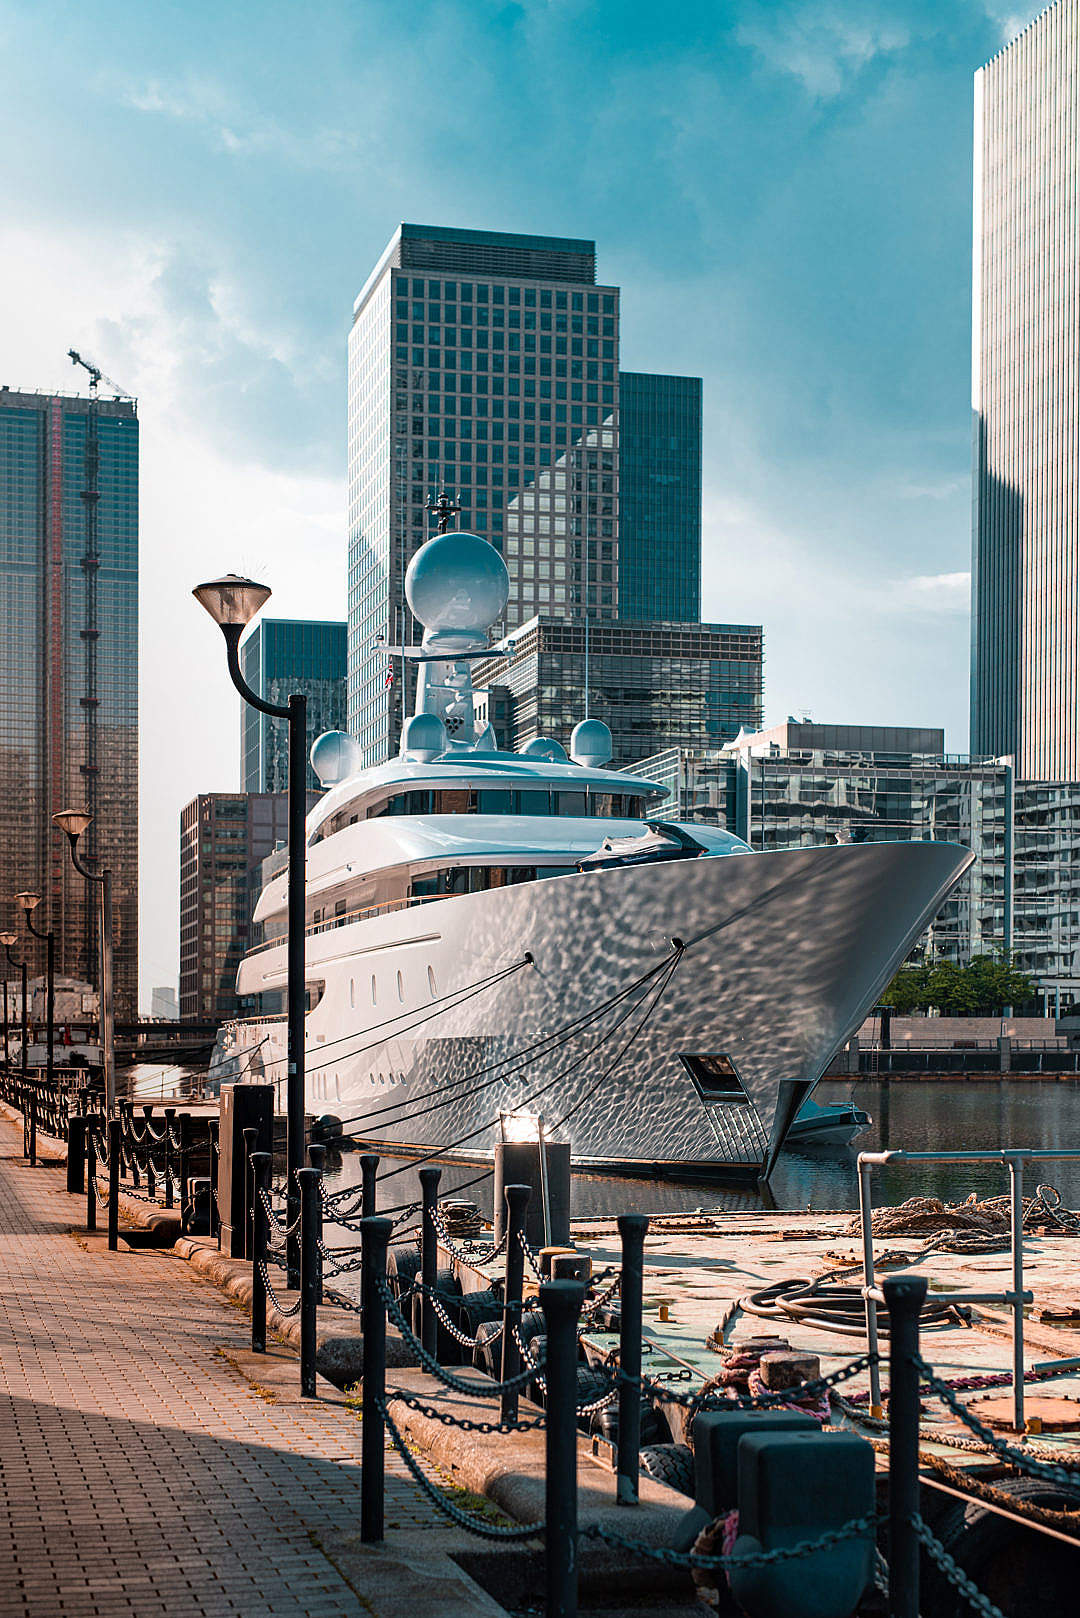 Download Luxury Mega Yacht in London Harbor FREE Stock Photo